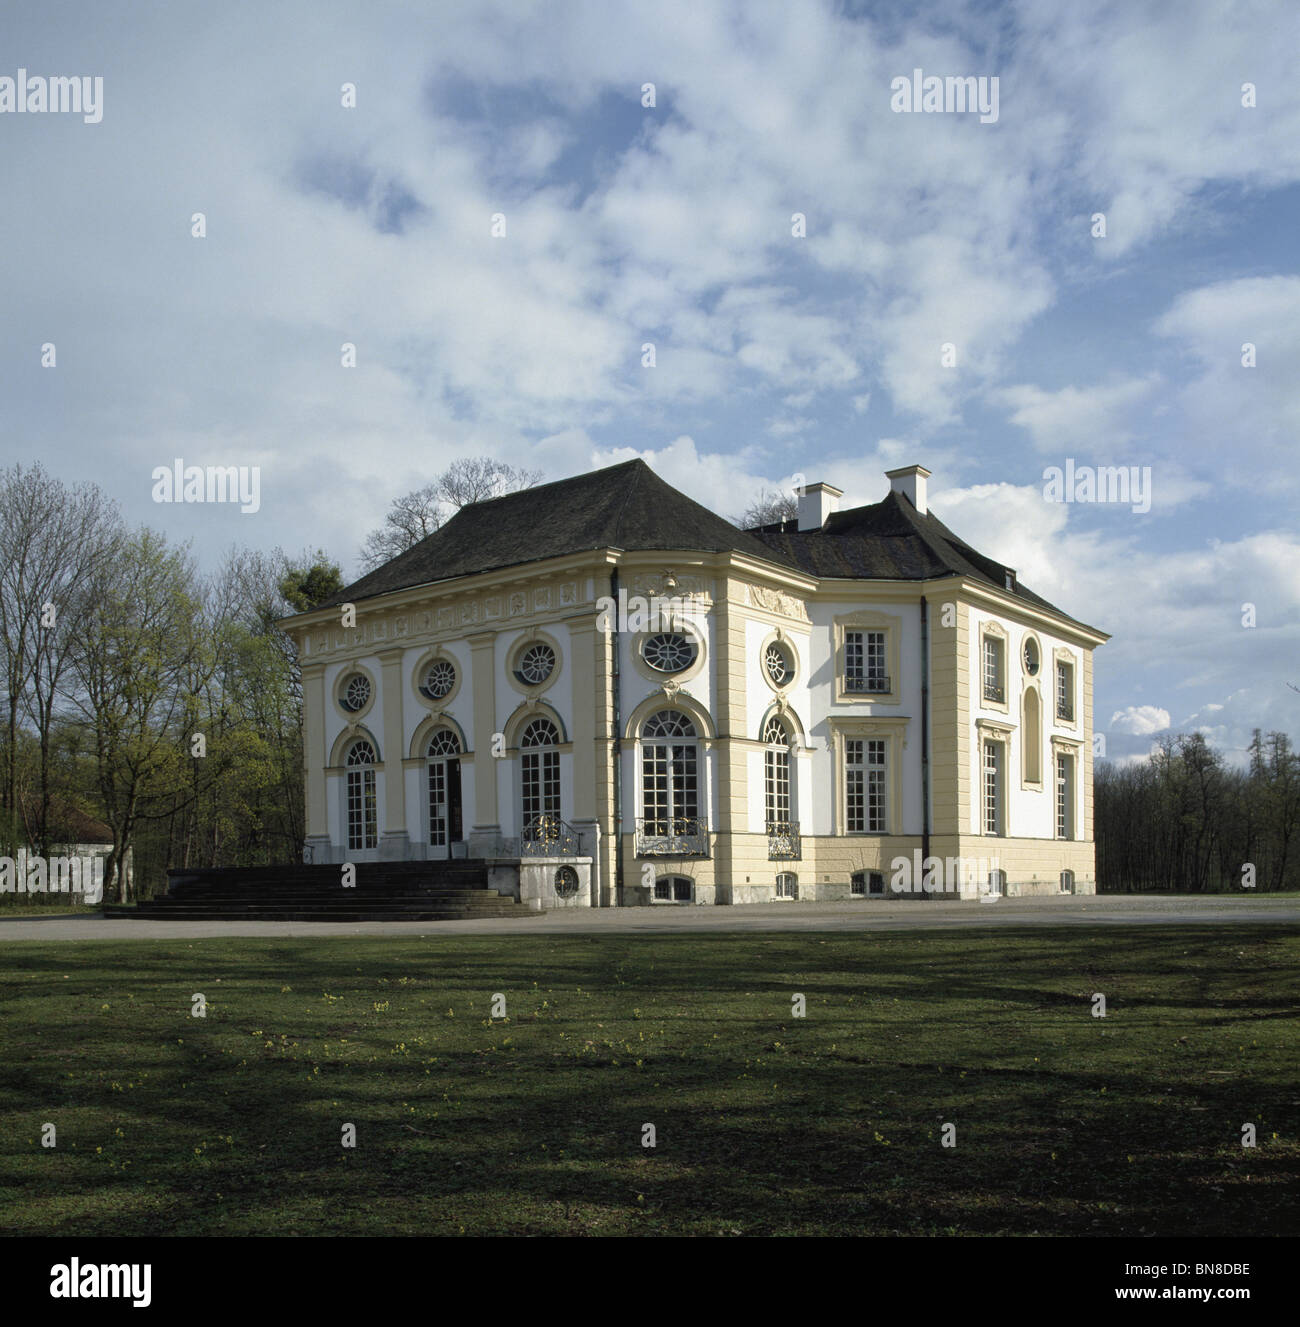 Badenburg (Bath house) a baroque pavilion by Joseph Effner 1719Ð1721at Schloss Nymphenburg, Munich. Stock Photo